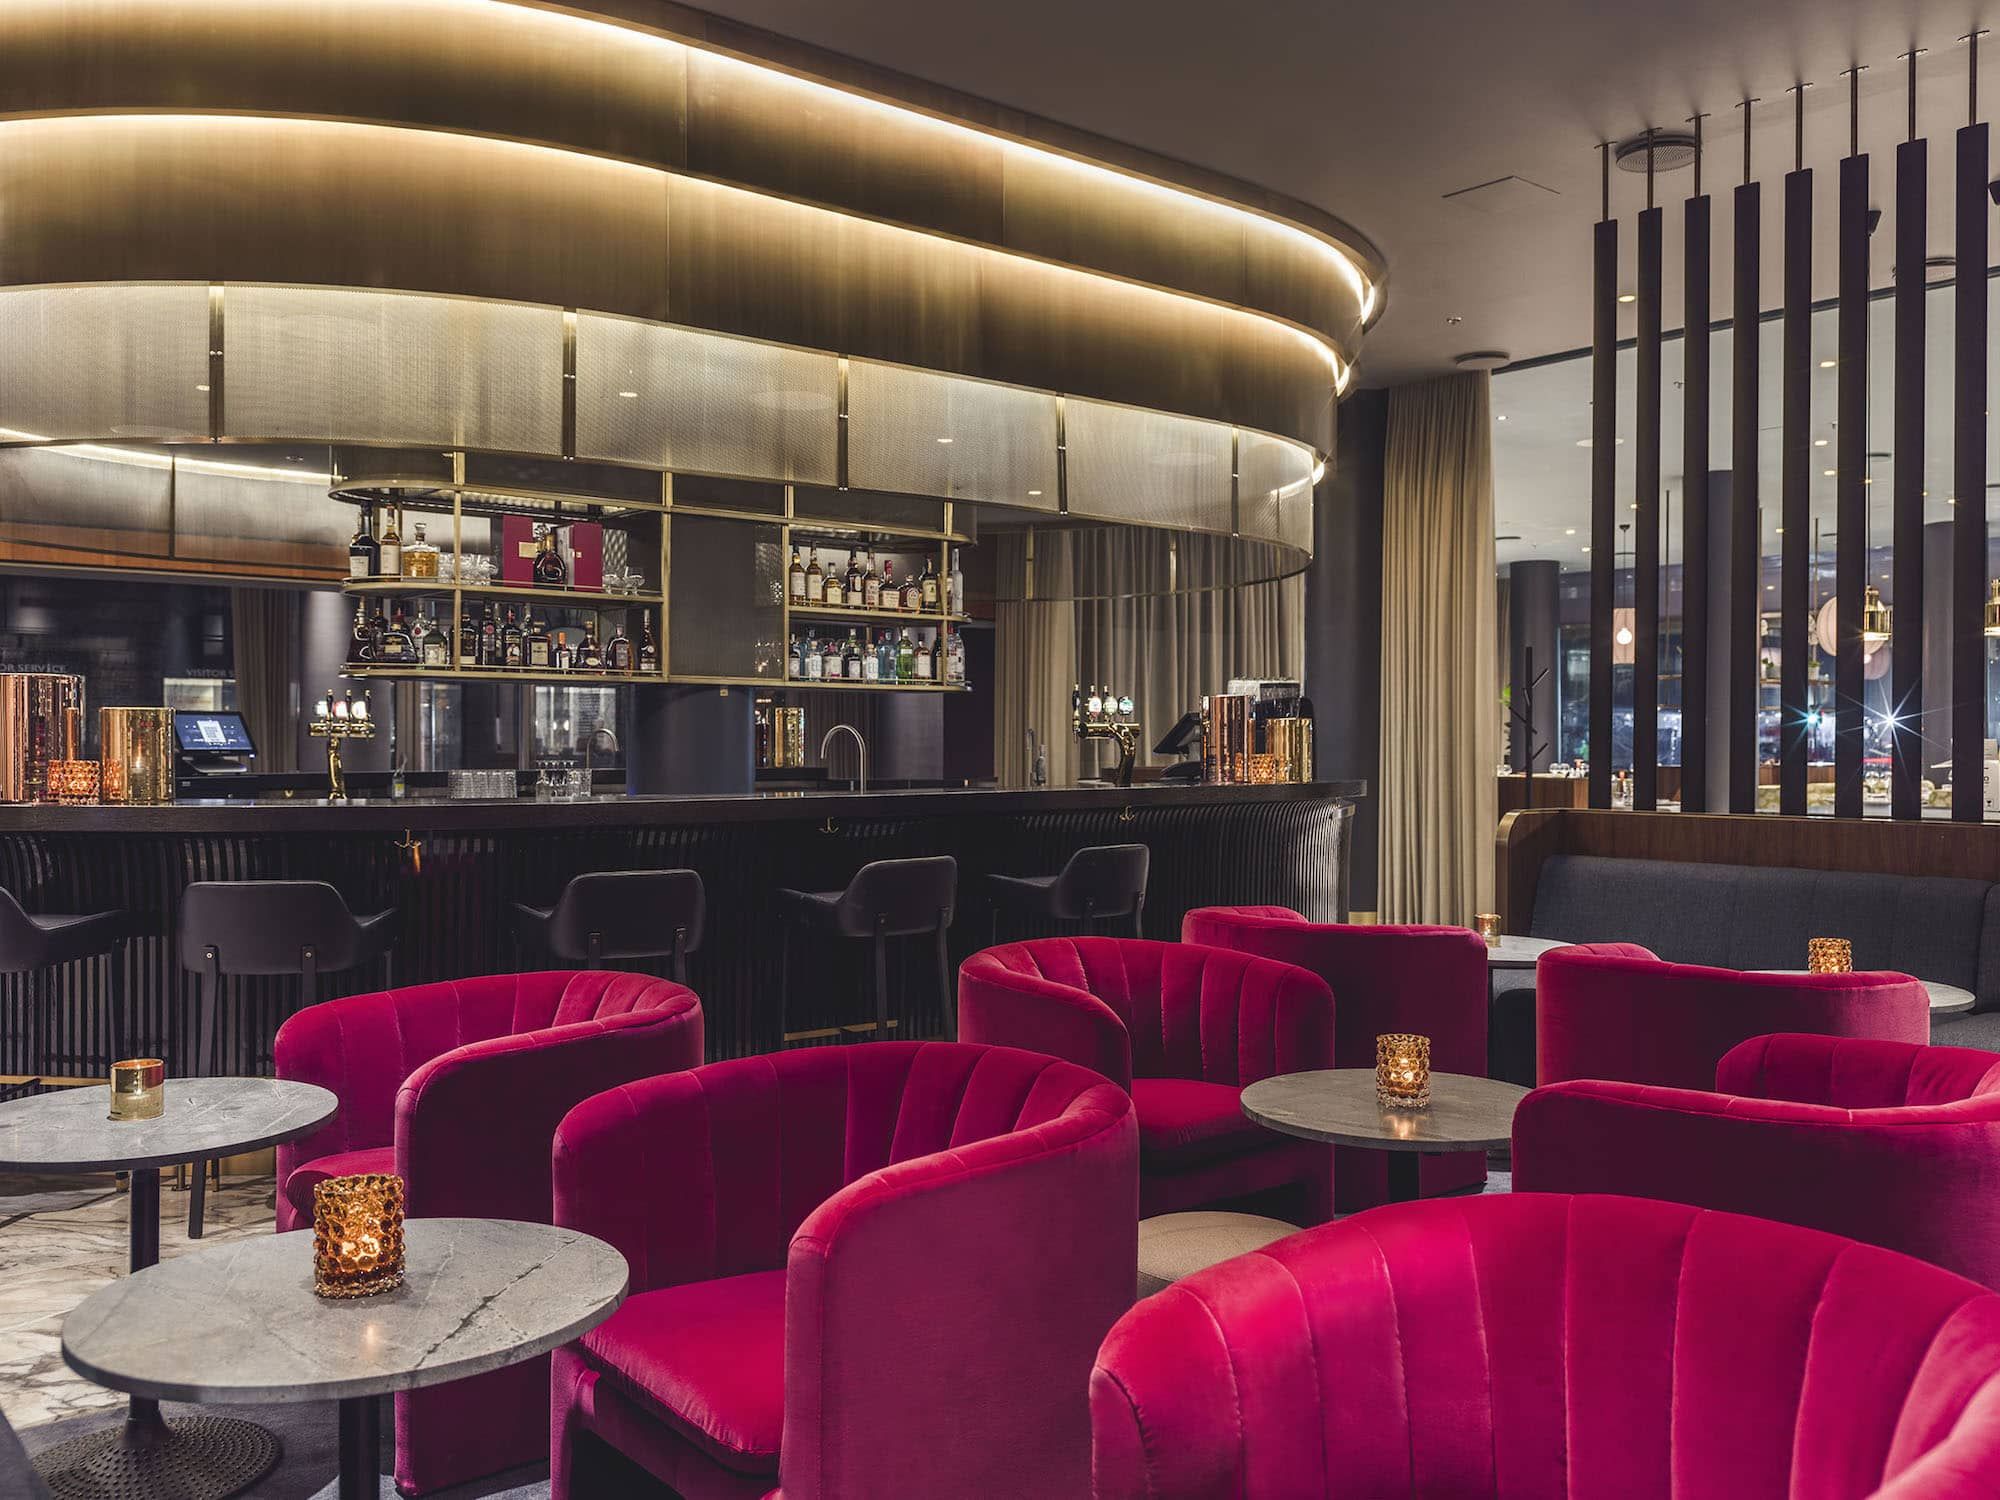 The Café Royal bar of the Radisson Blu Royal Hotel in Copenhagen designed by Arne Jacobsen